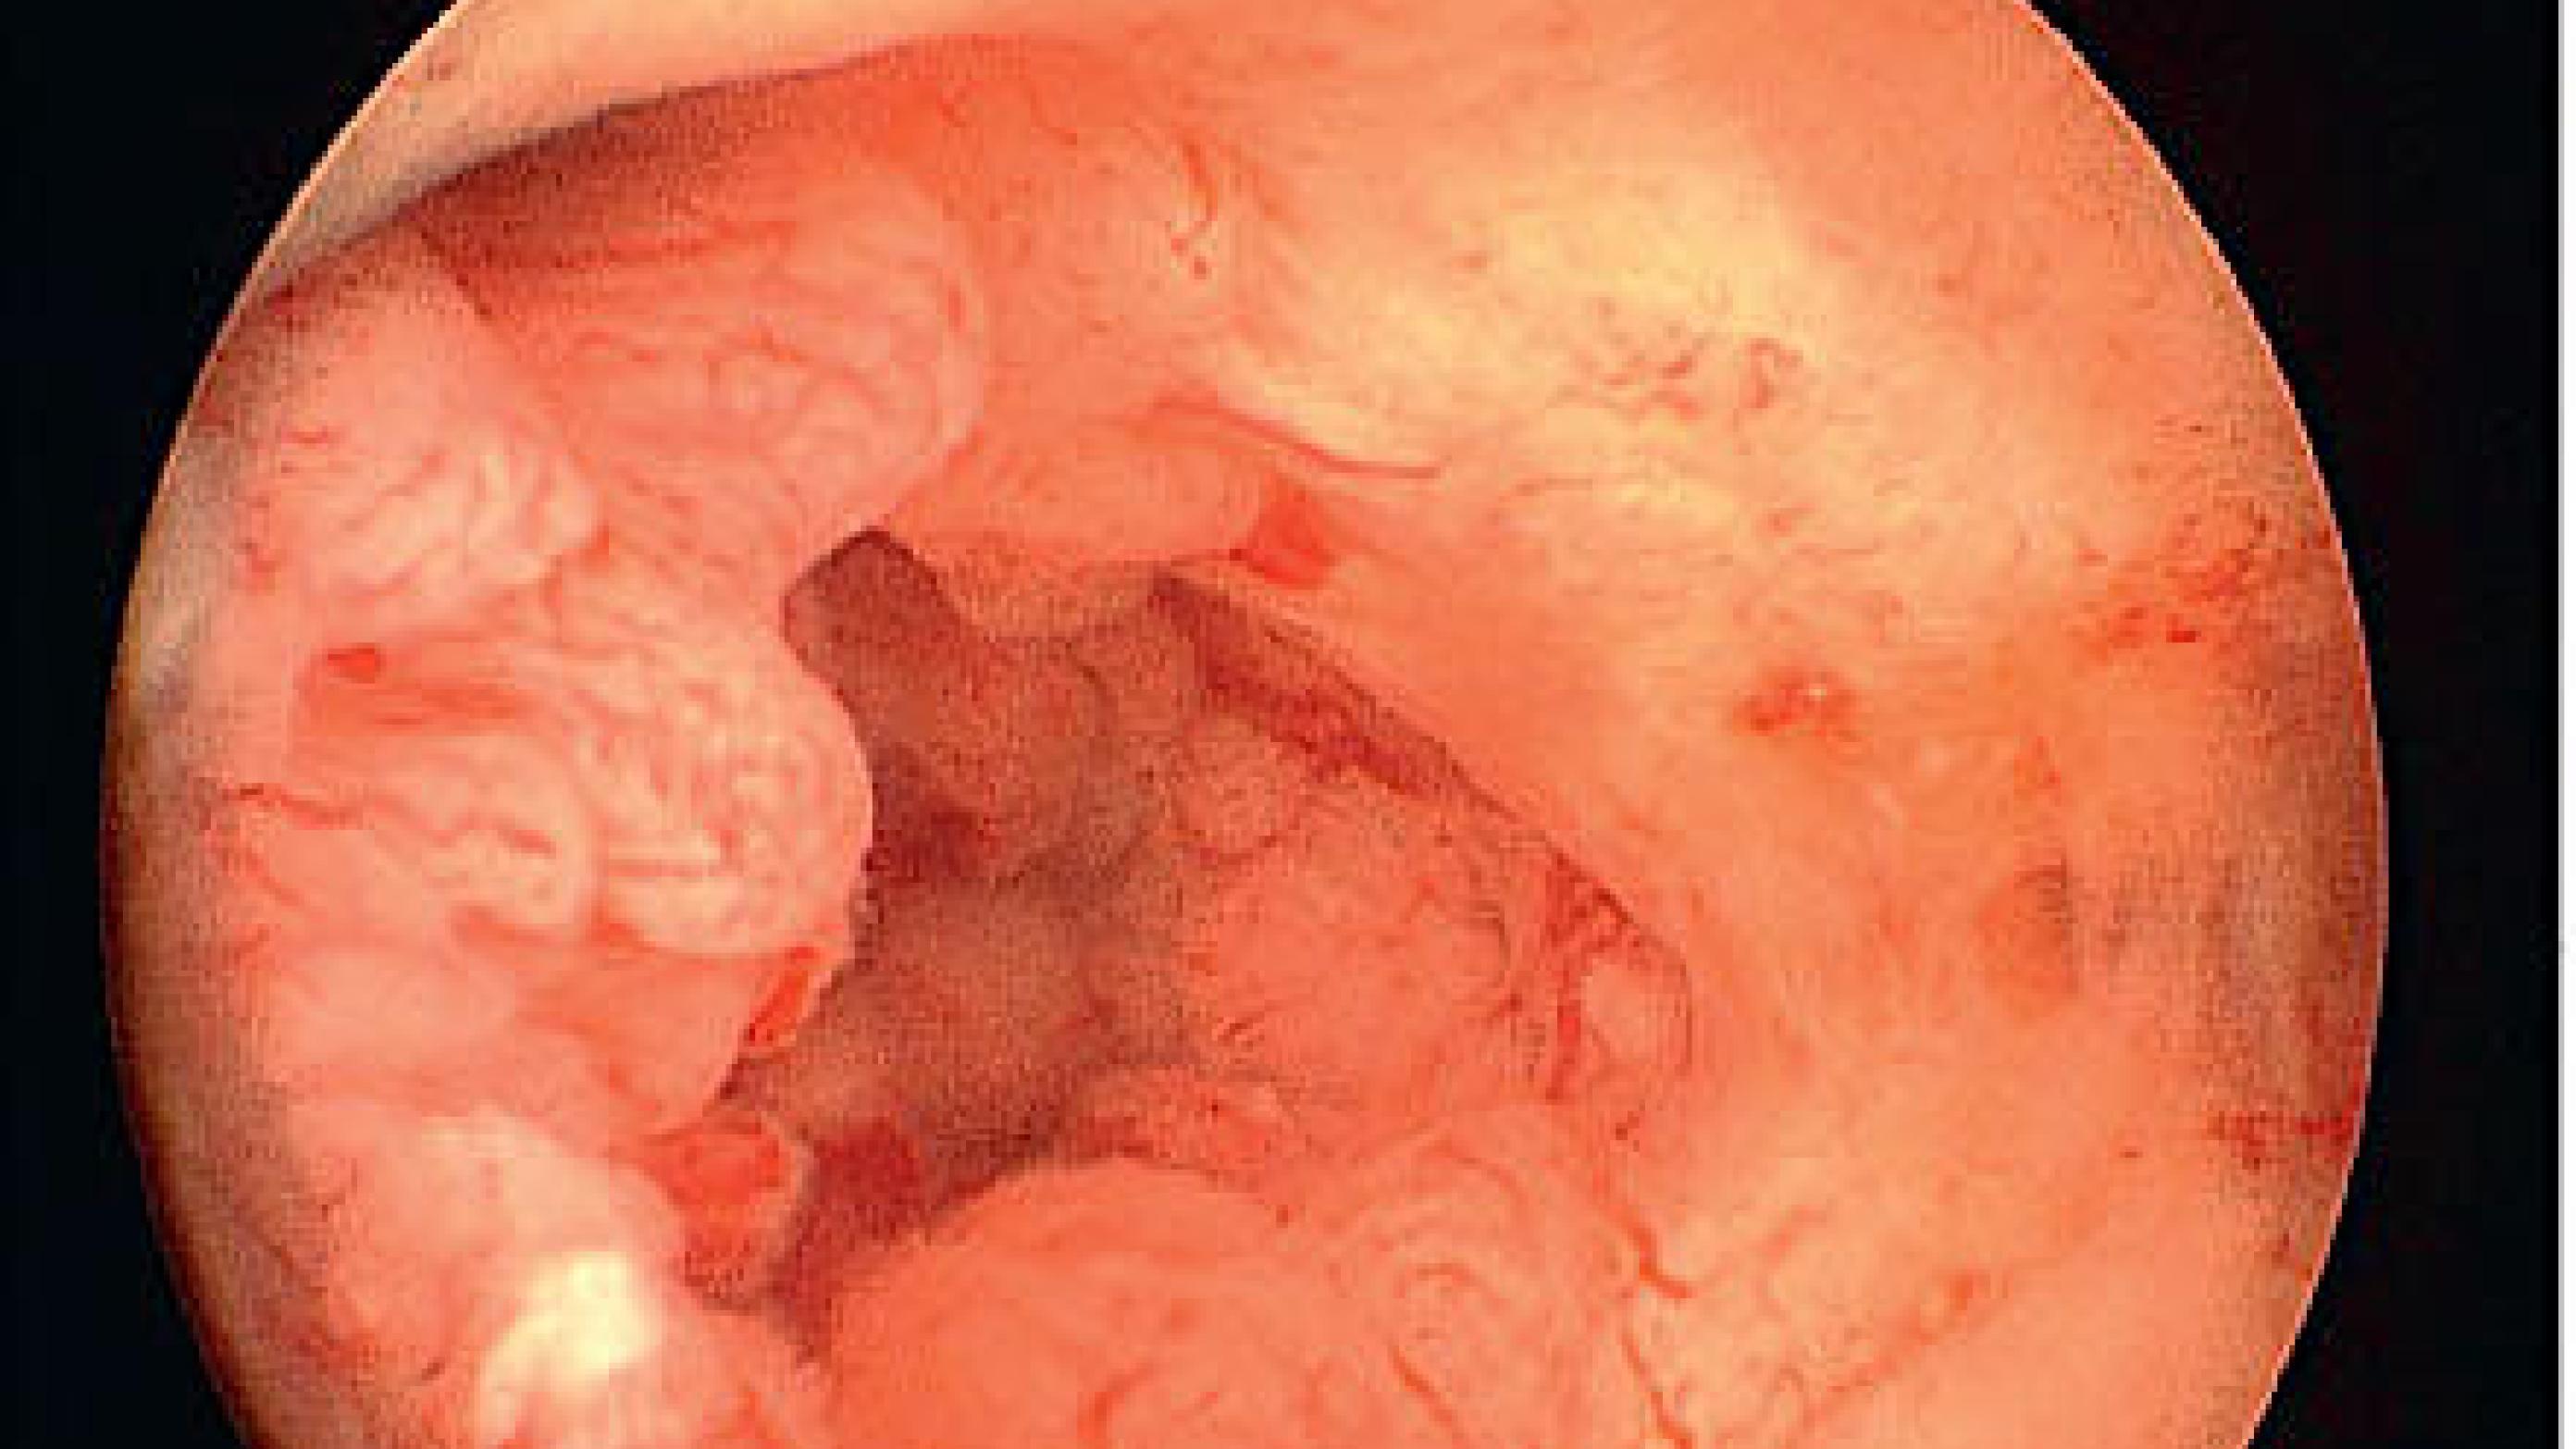 Endometrial cancer seen by hysteroscopy.